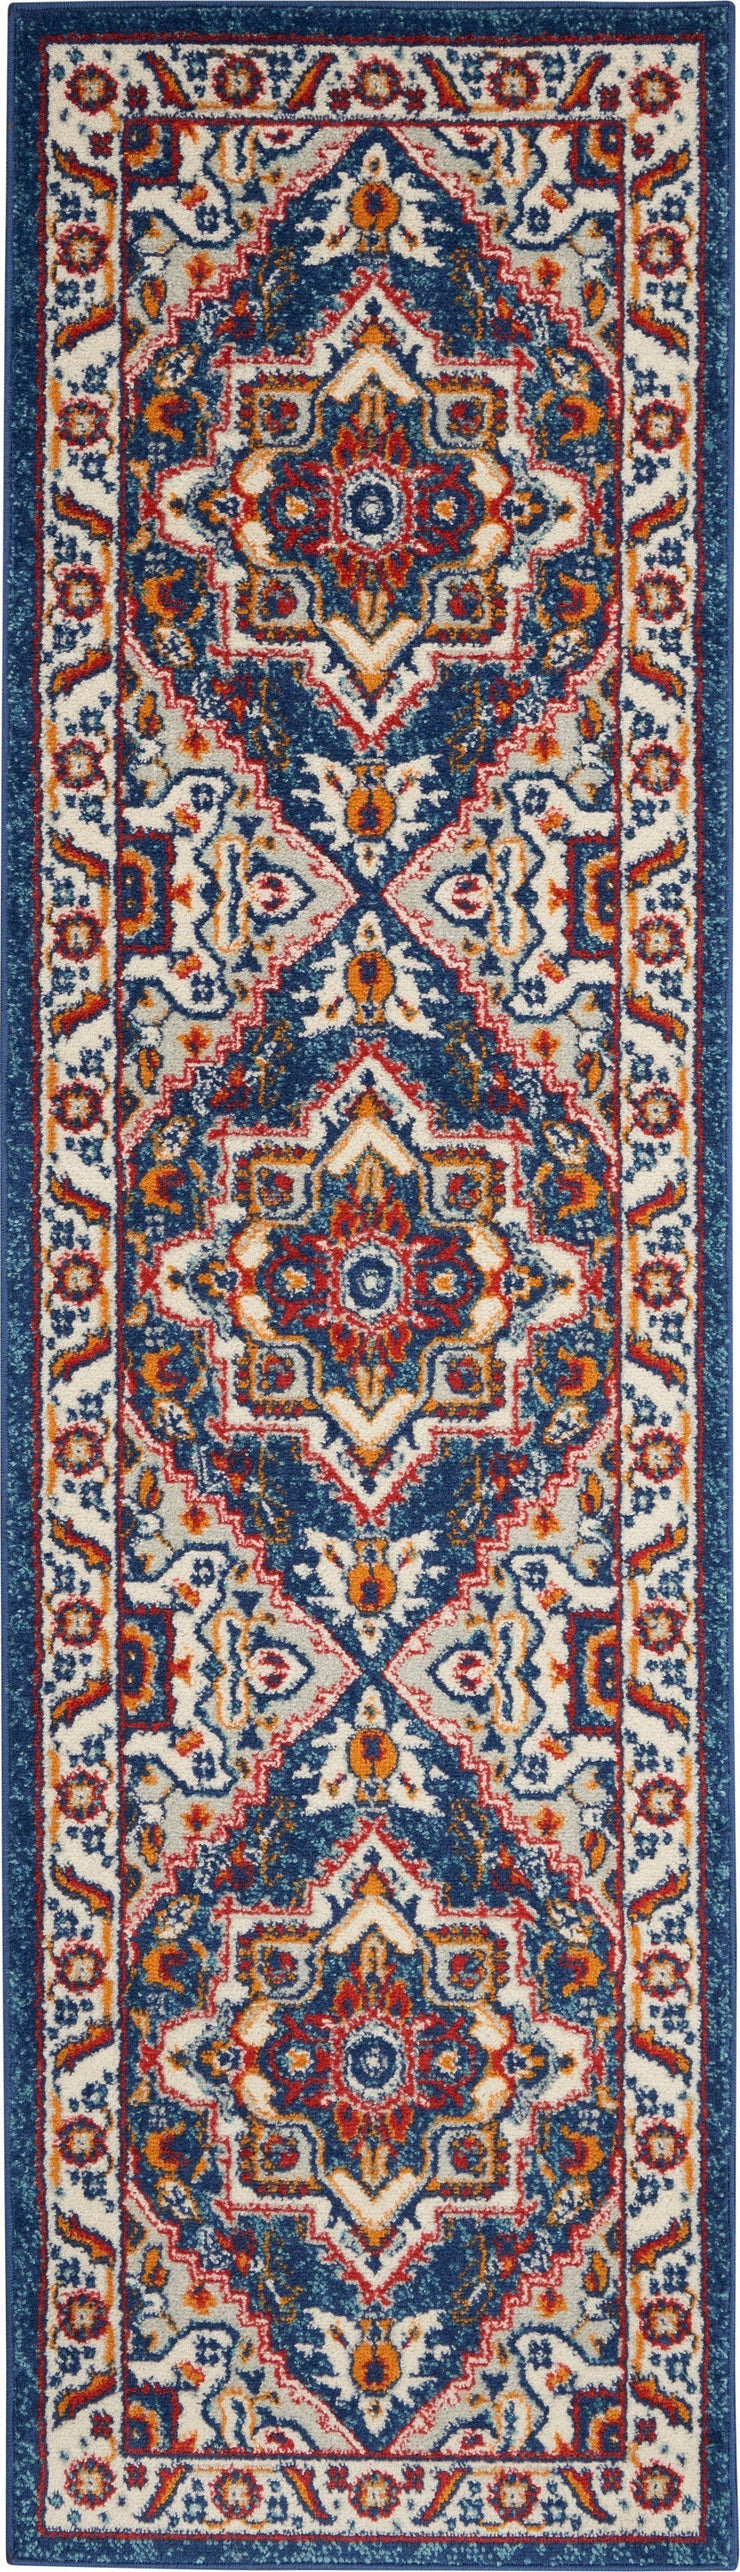 passion blue multicolor rug by nourison 99446766748 redo 2